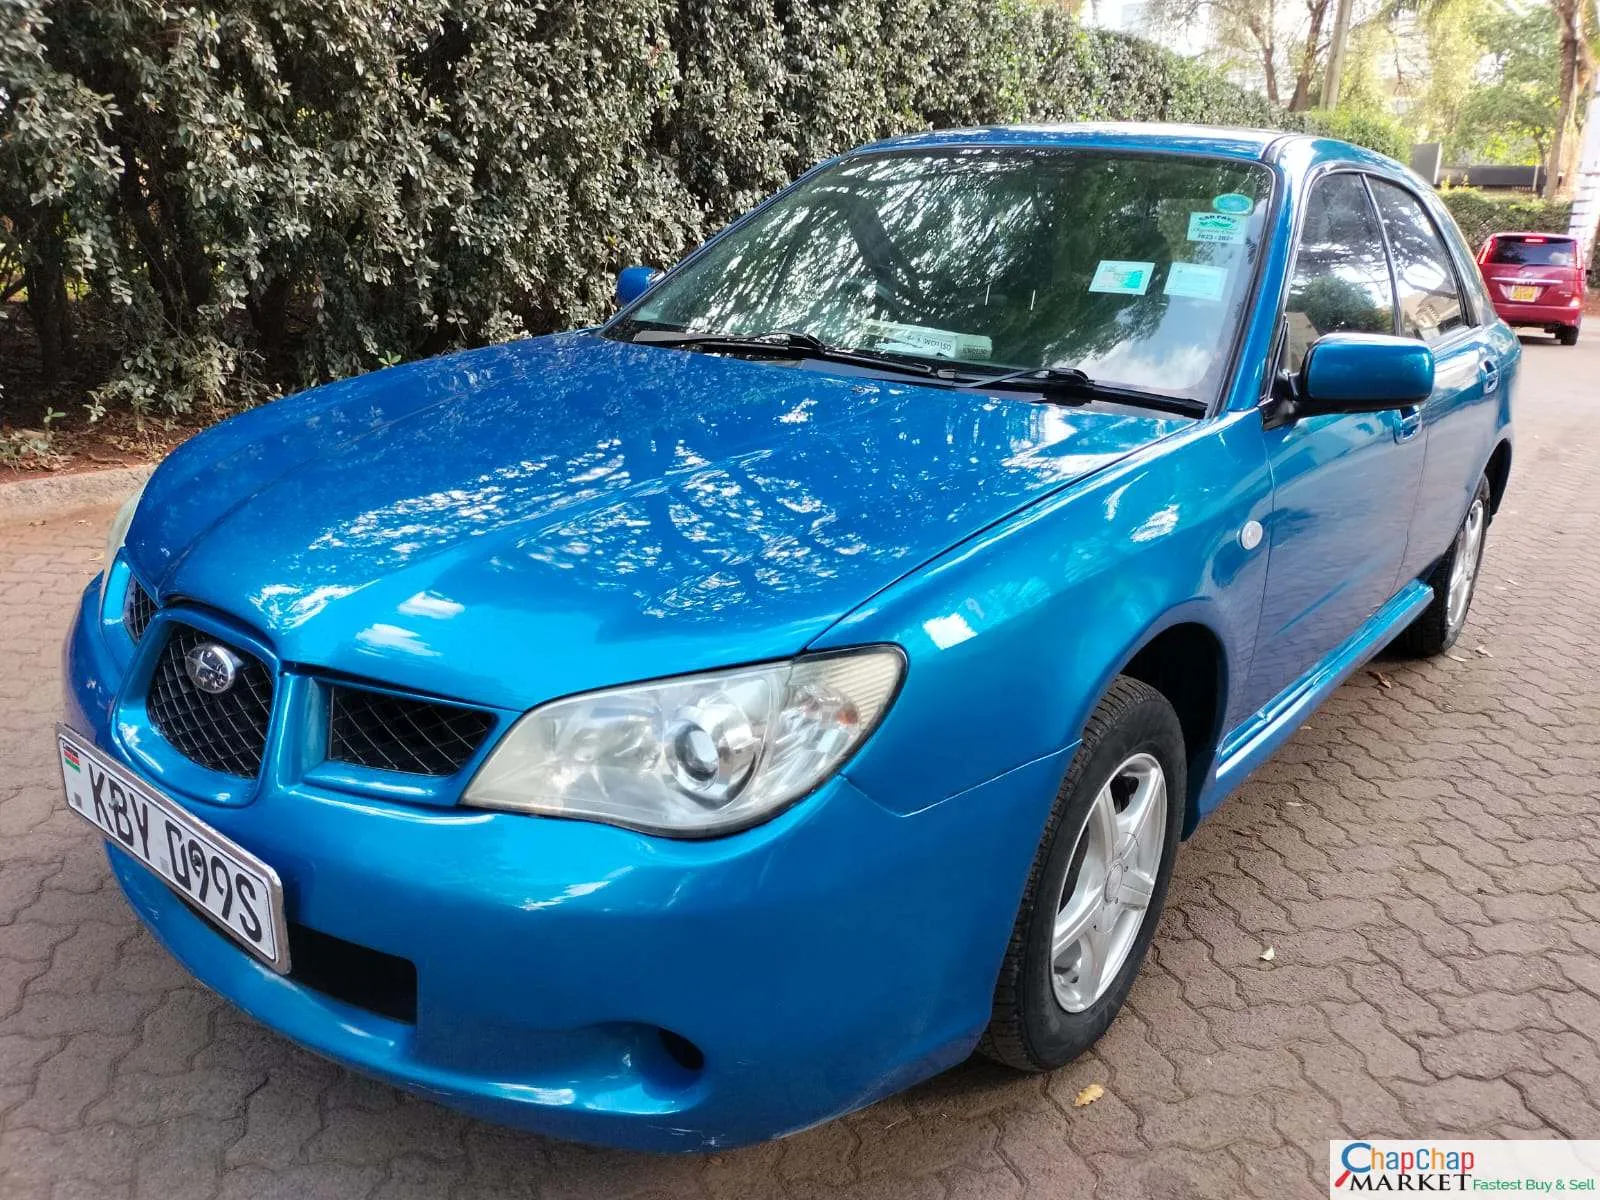 Subaru Impreza kenya You Pay 30% deposit Trade in Ok Impreza for sale in kenya hire purchase installments EXCLUSIVE